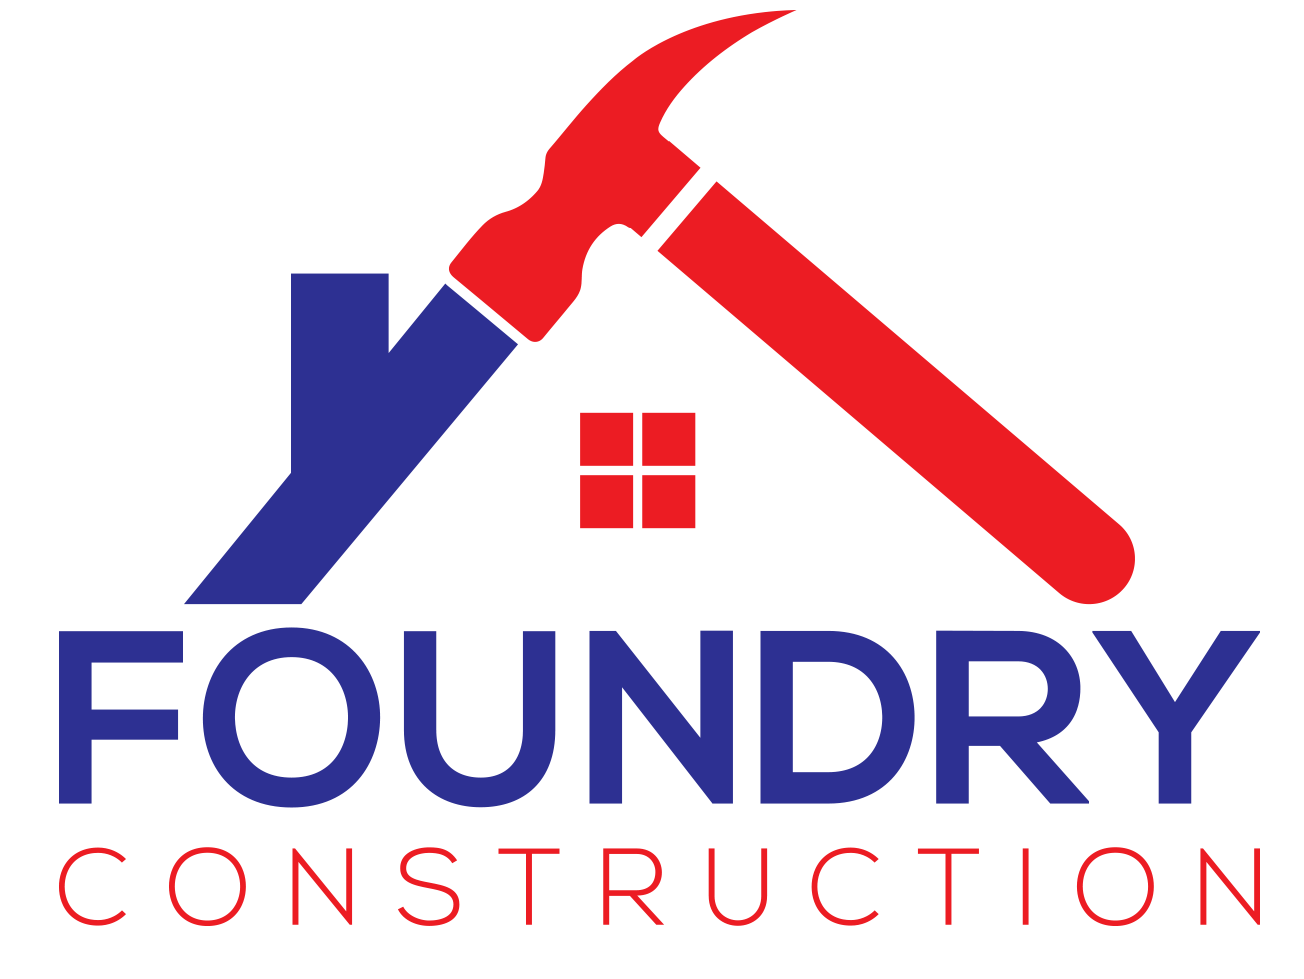 FOUNDRY CONSTRUCTION